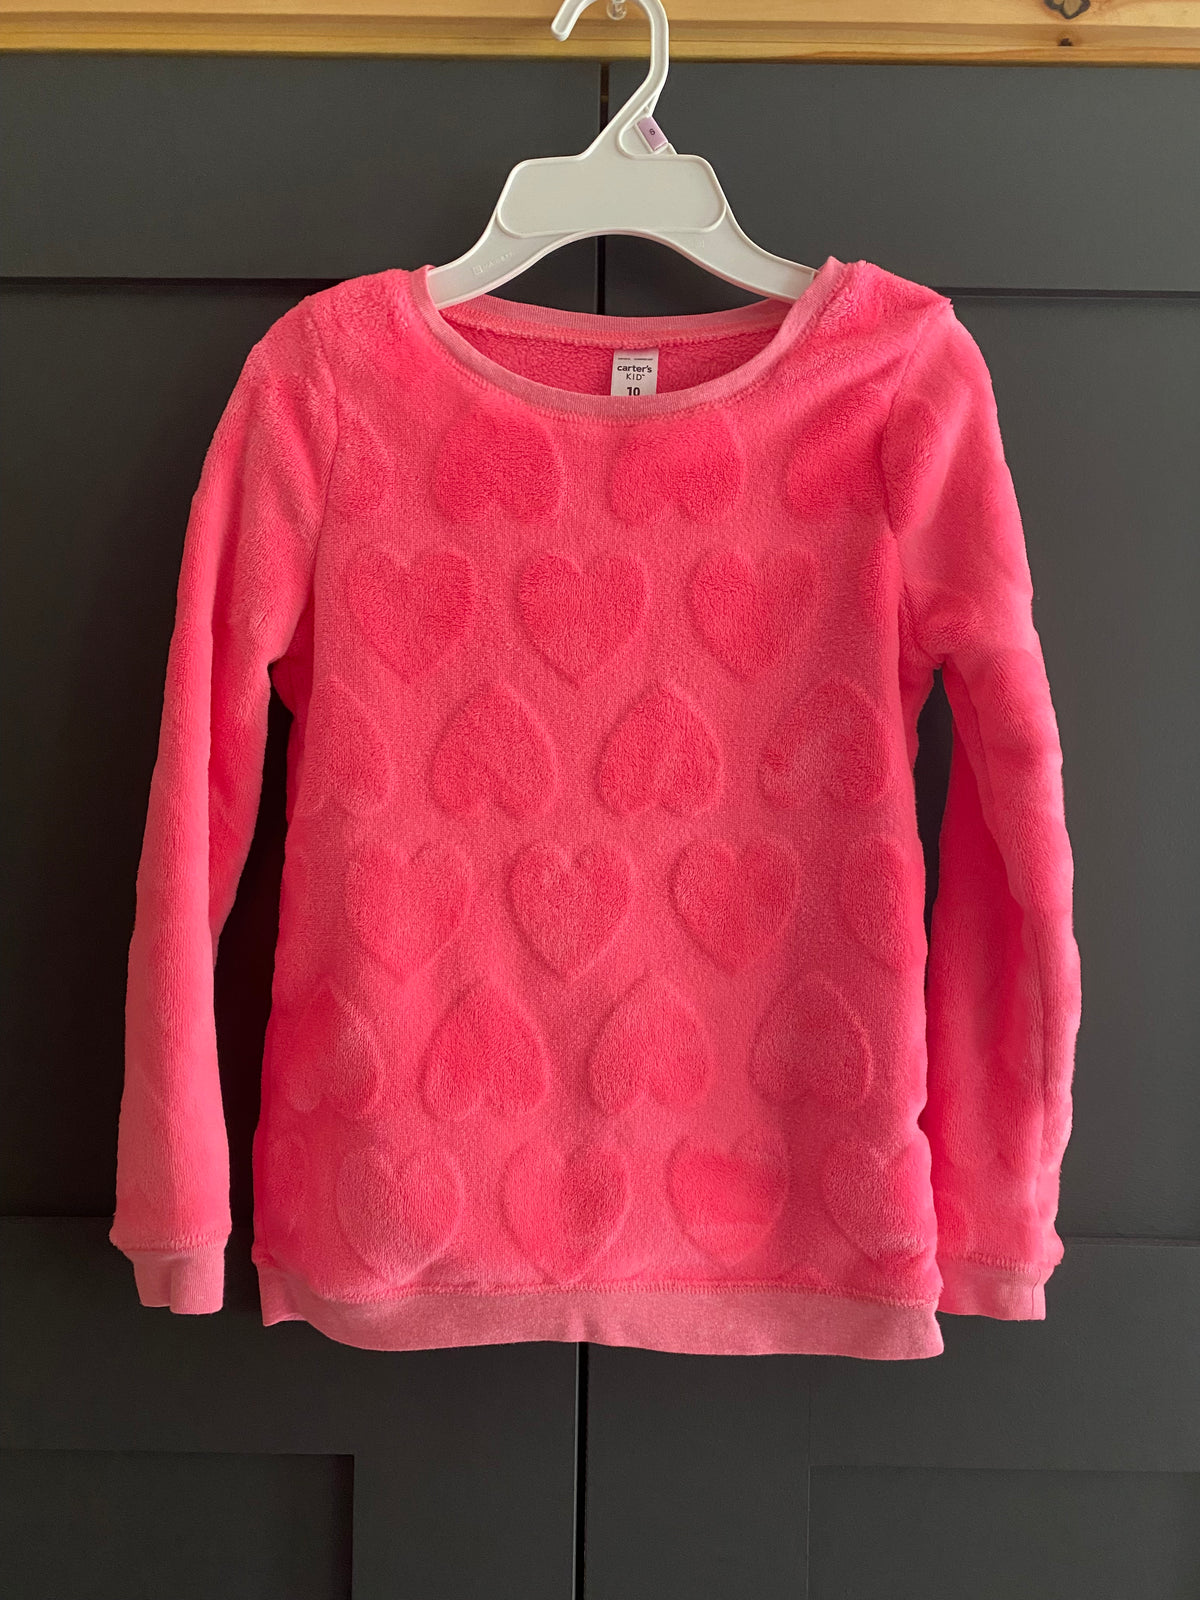 Sweater (Girls Size 10)